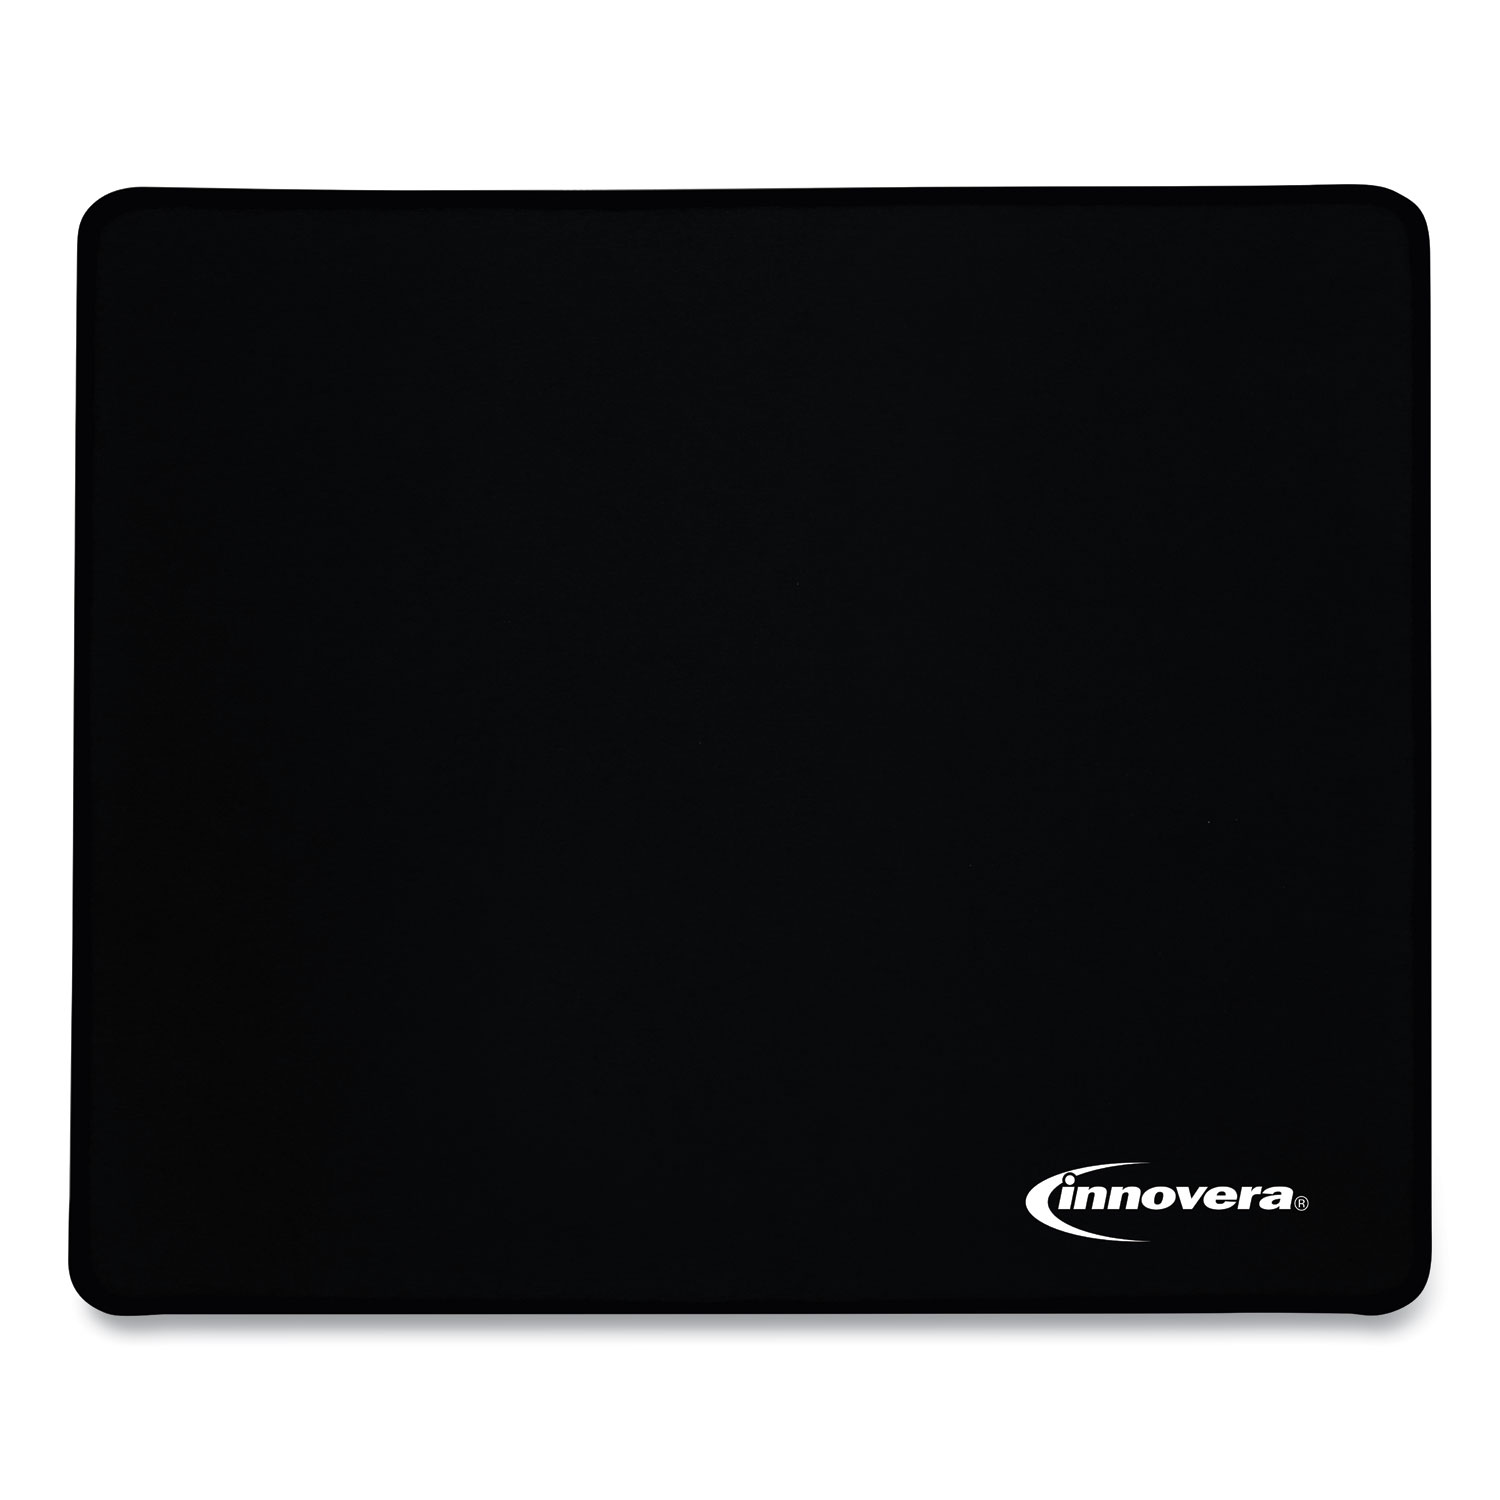  Innovera IVR52600 Large Mouse Pad, Nonskid Base, 9 7/8 x 11 7/8 x 1/8, Black (IVR52600) 